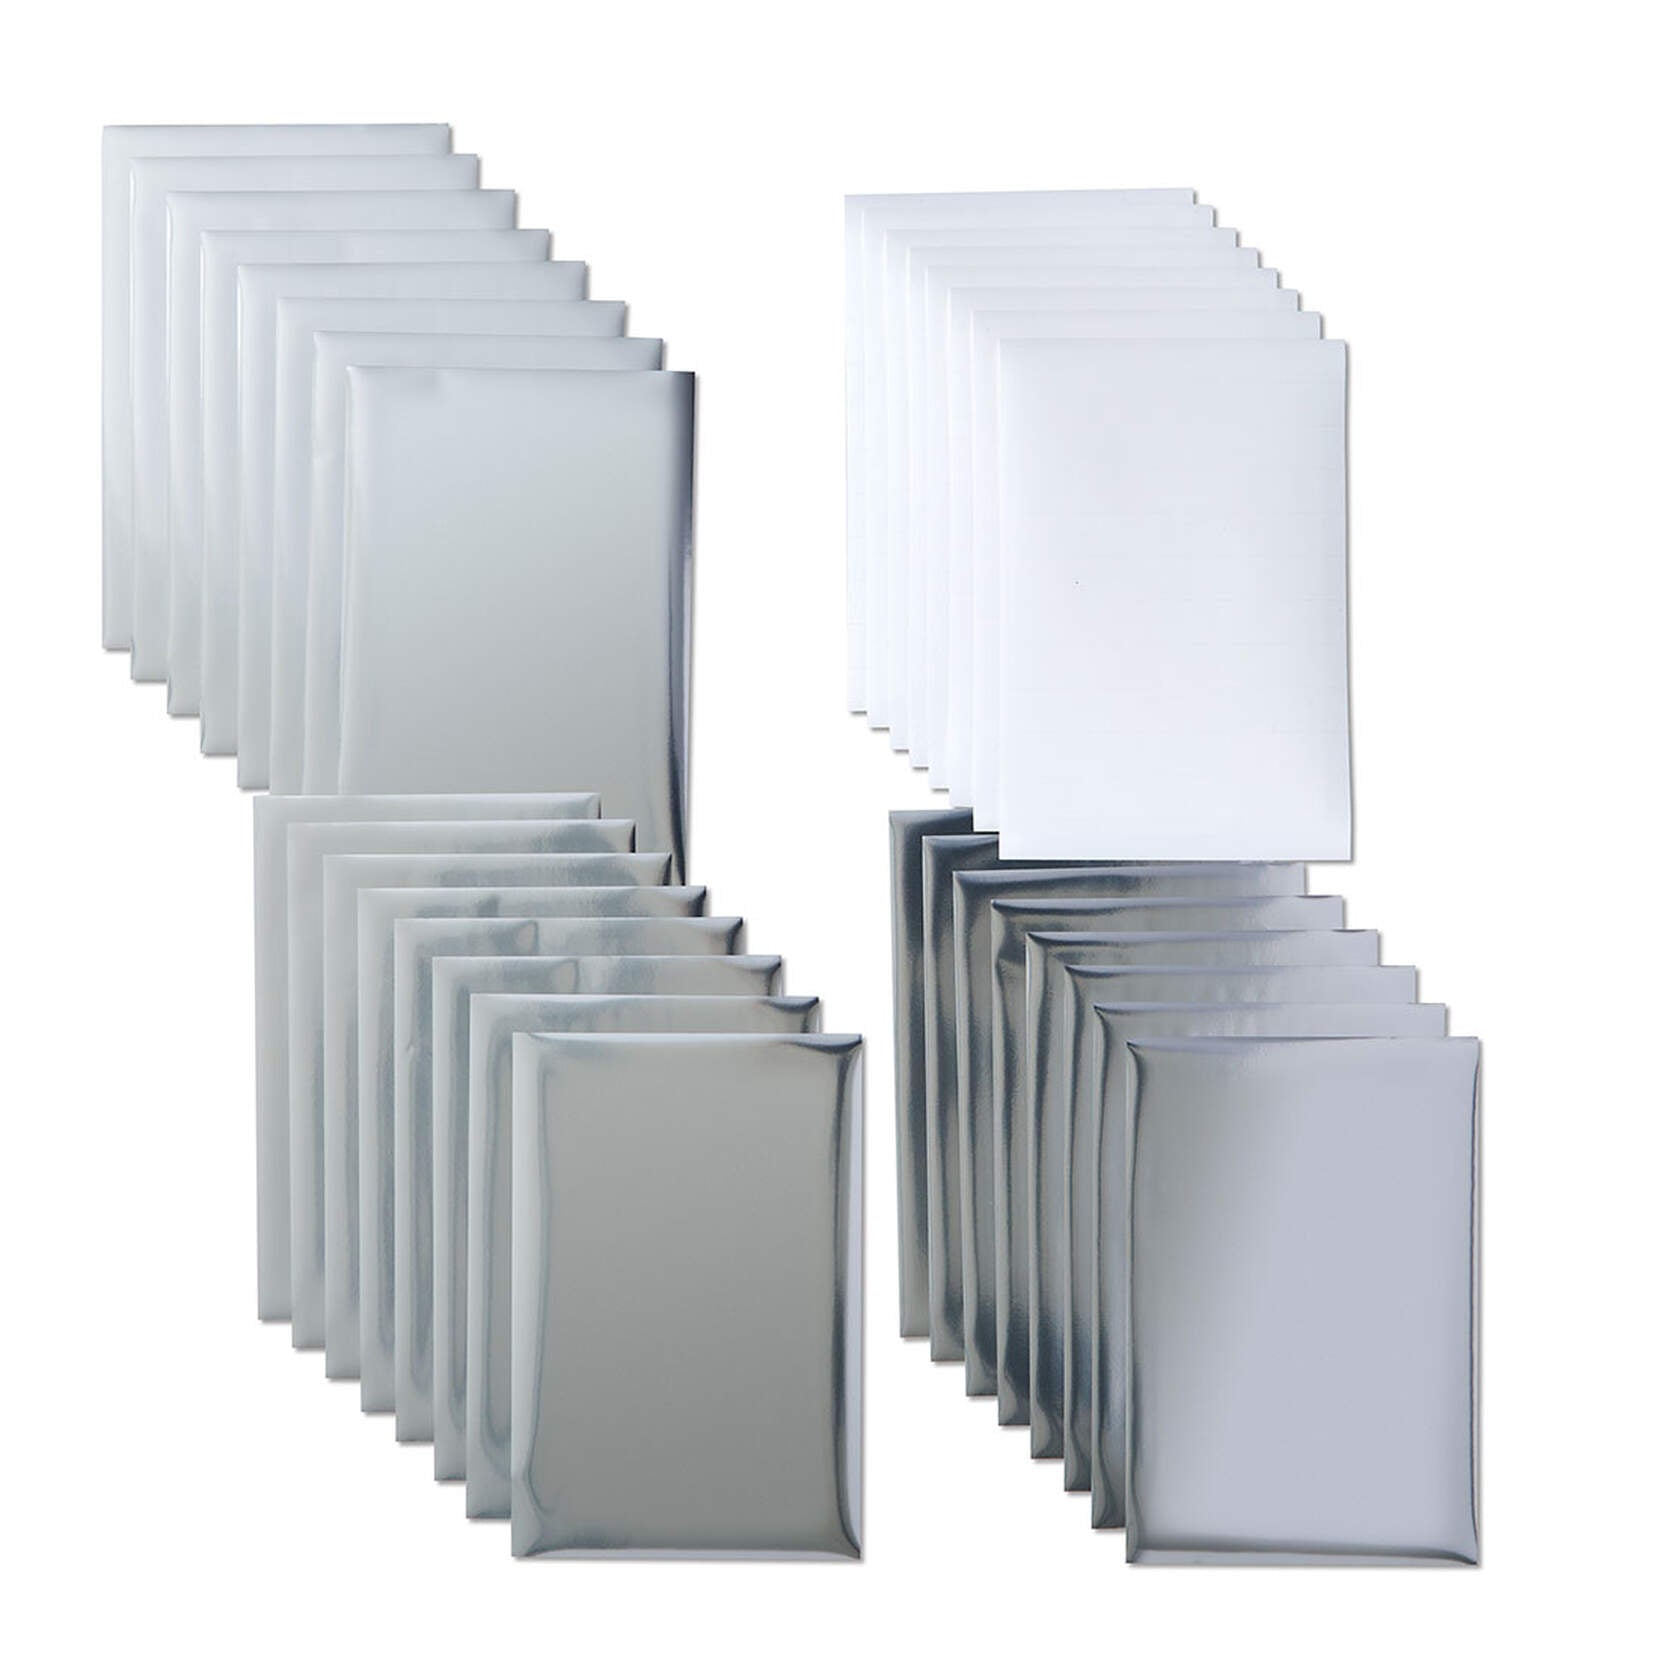 Cricut Transfer Foil Sheets 10X15Cm 24 Sheets (Silver)